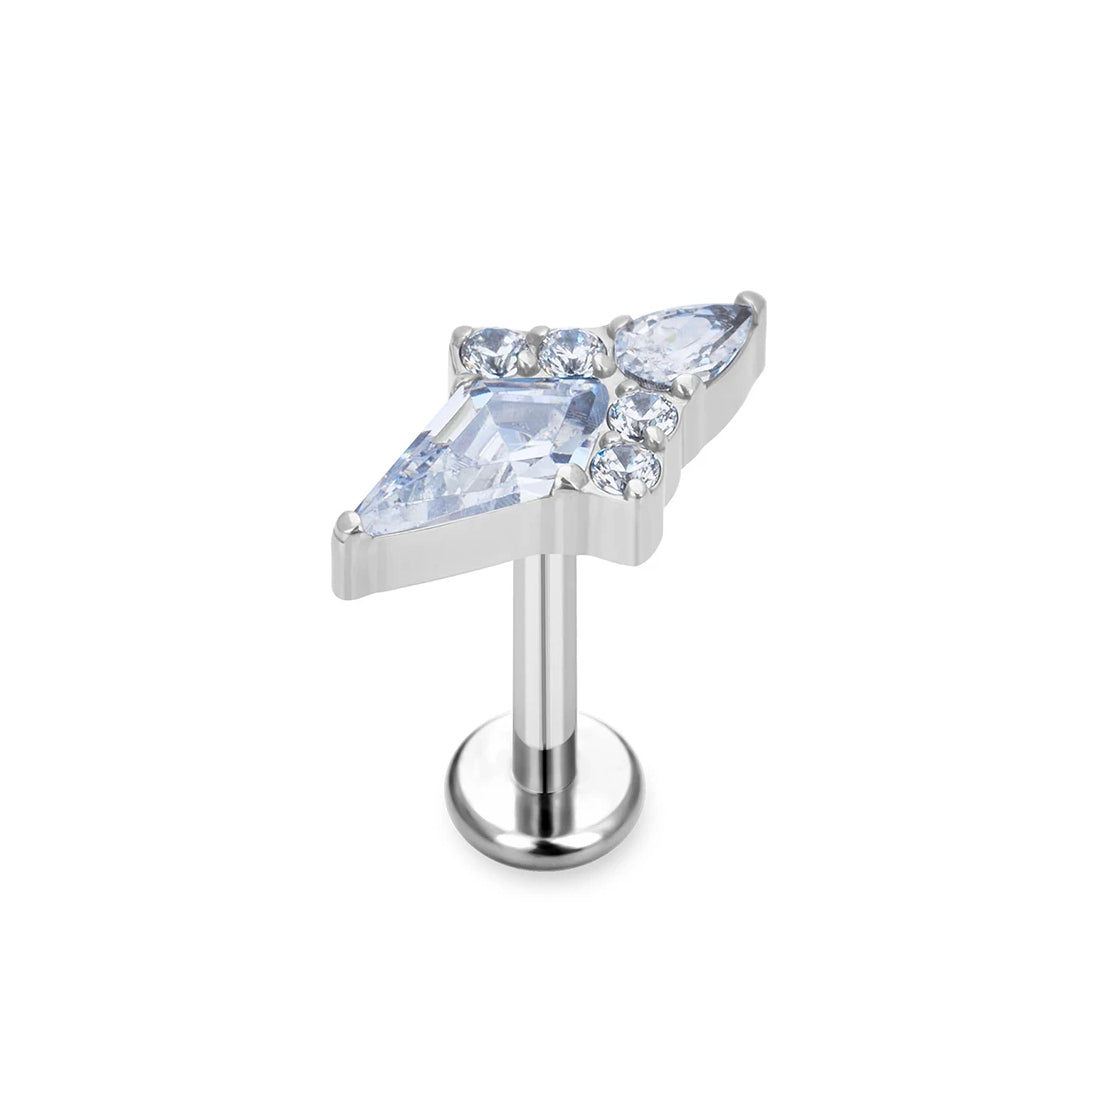 Clear ashley piercing with clear pink blue diamond titanium lip stud nose stud ear stud 16G